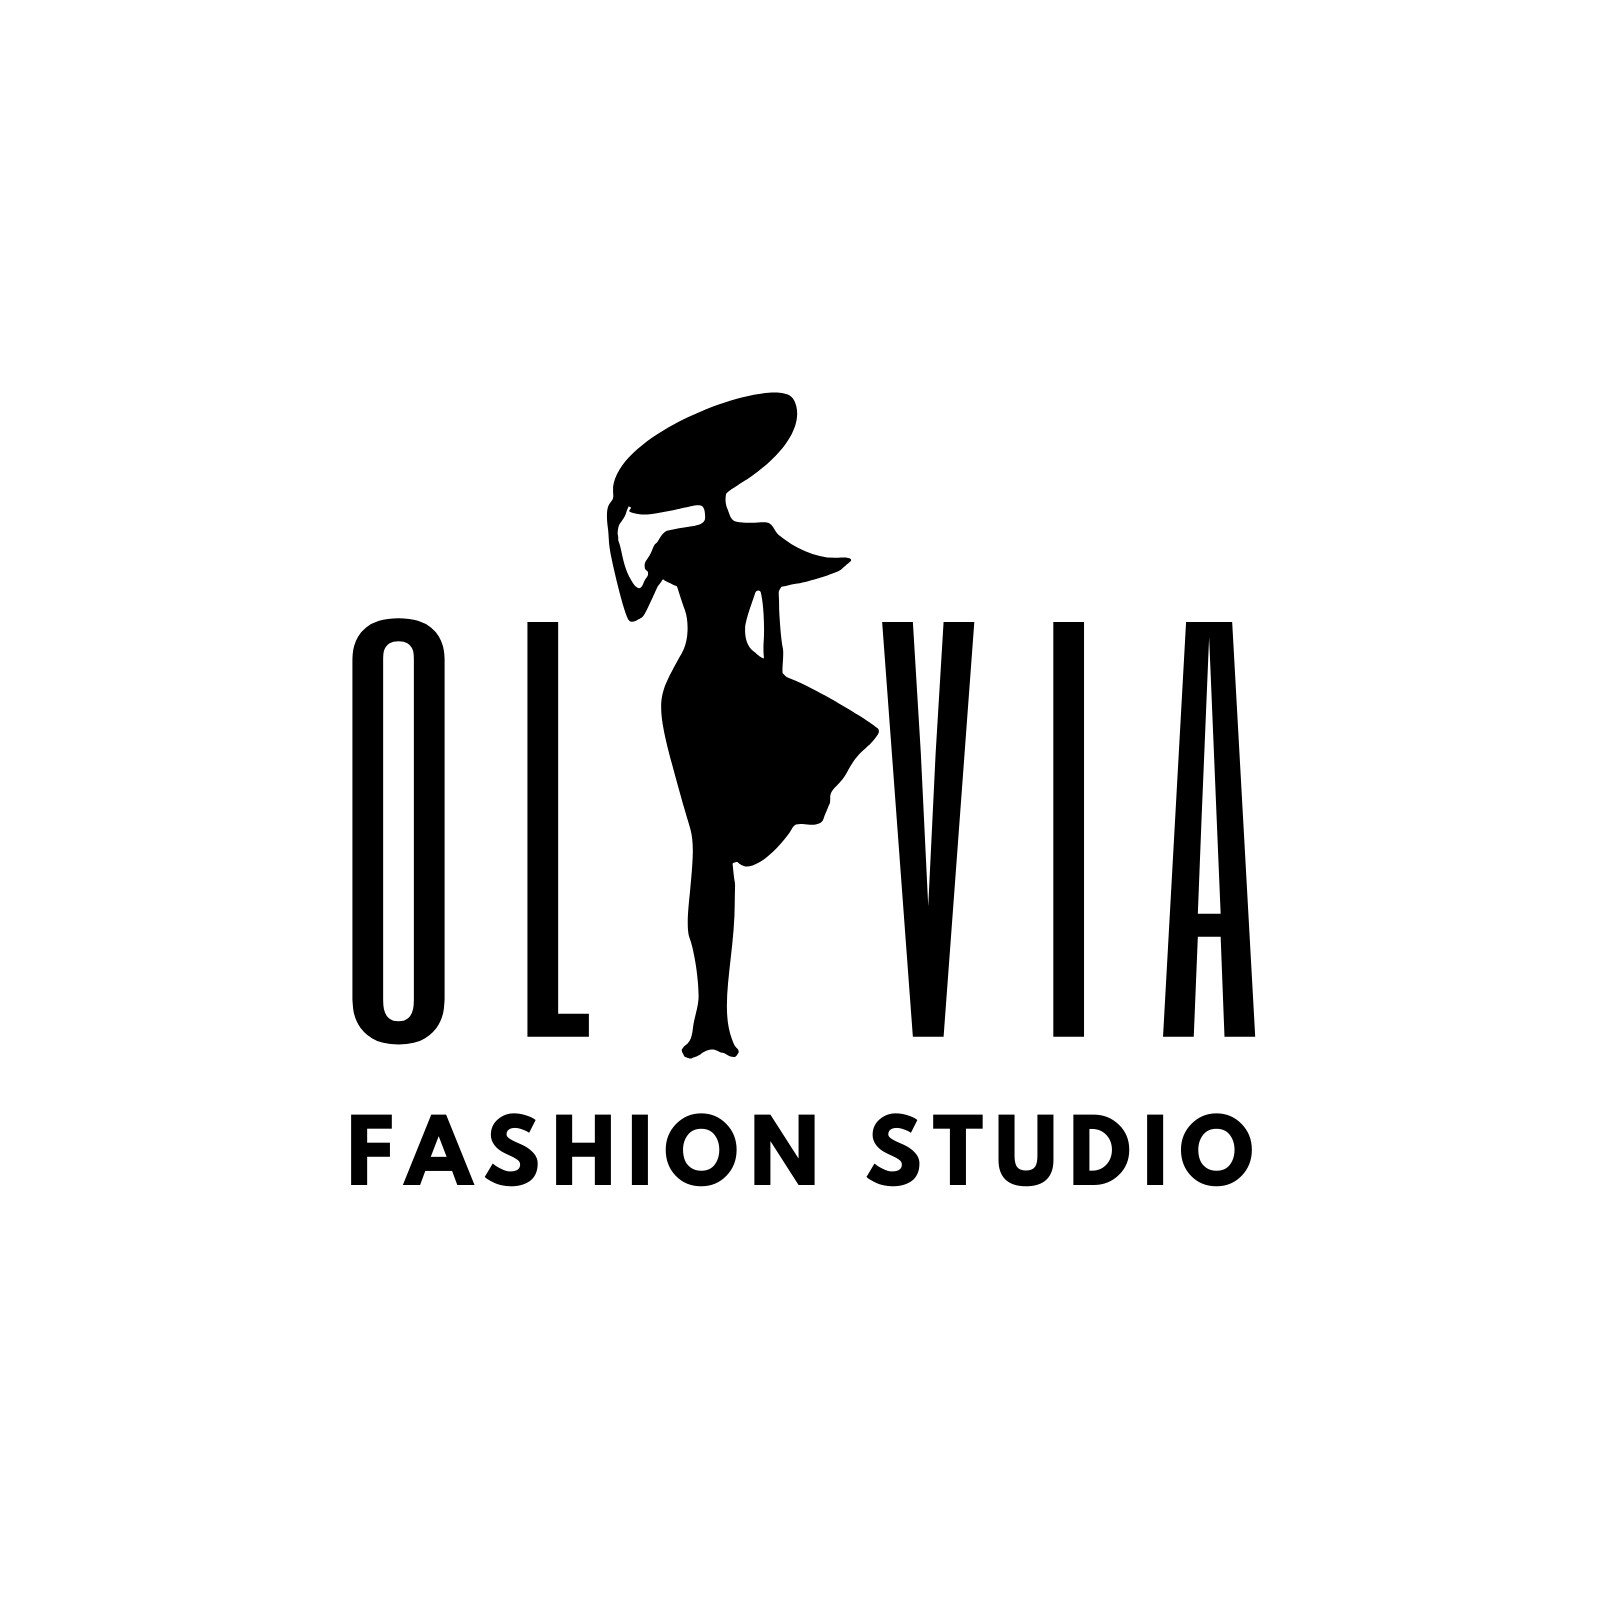 Fashion And Clothing Logos C